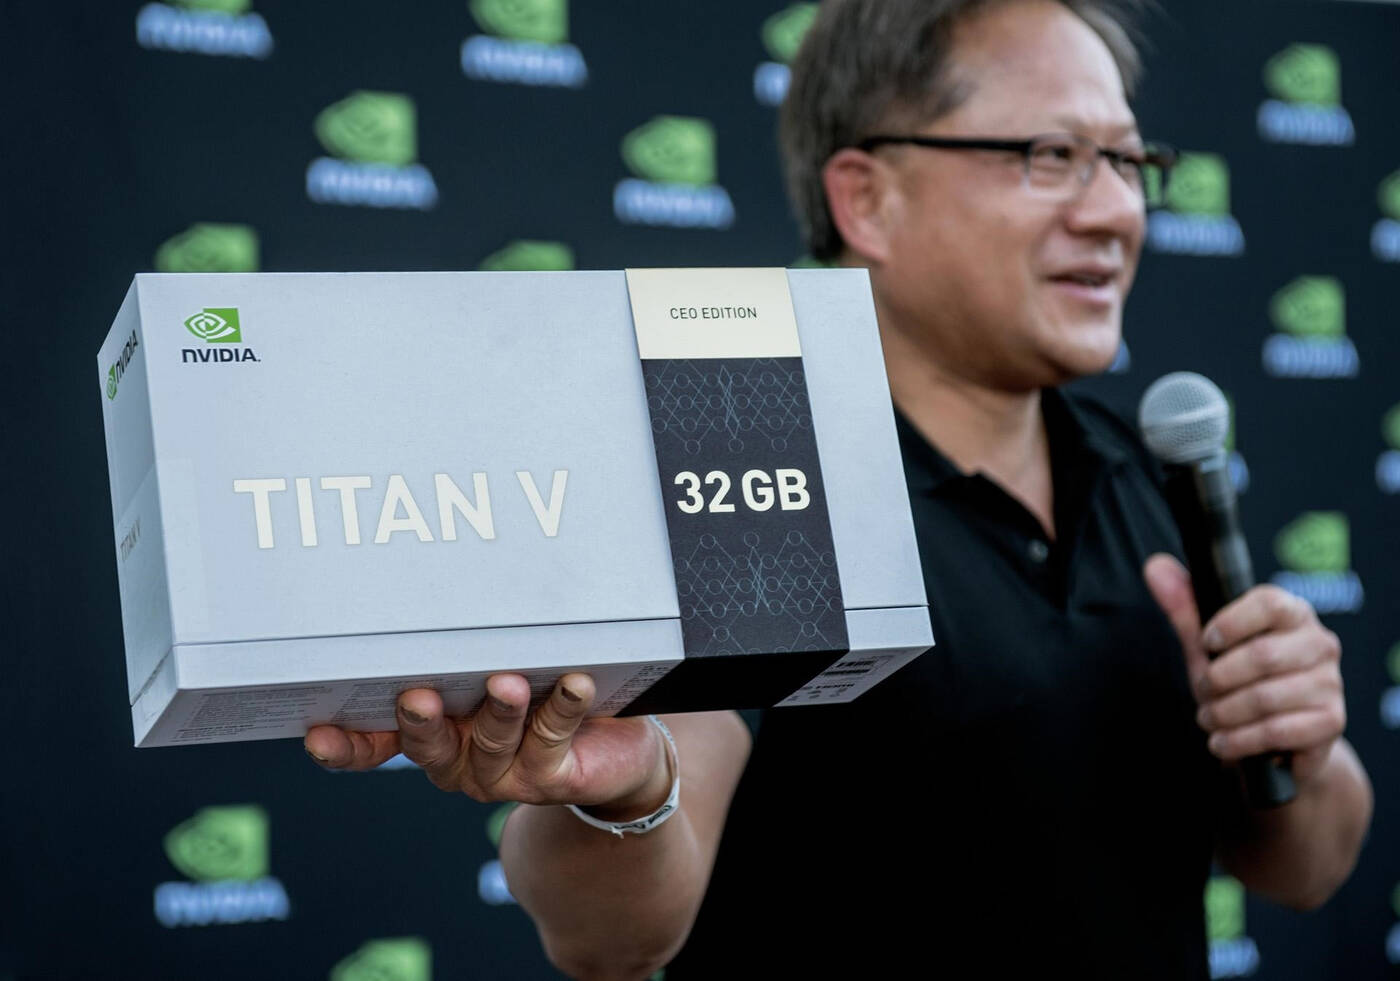 Titan V CEO Edition